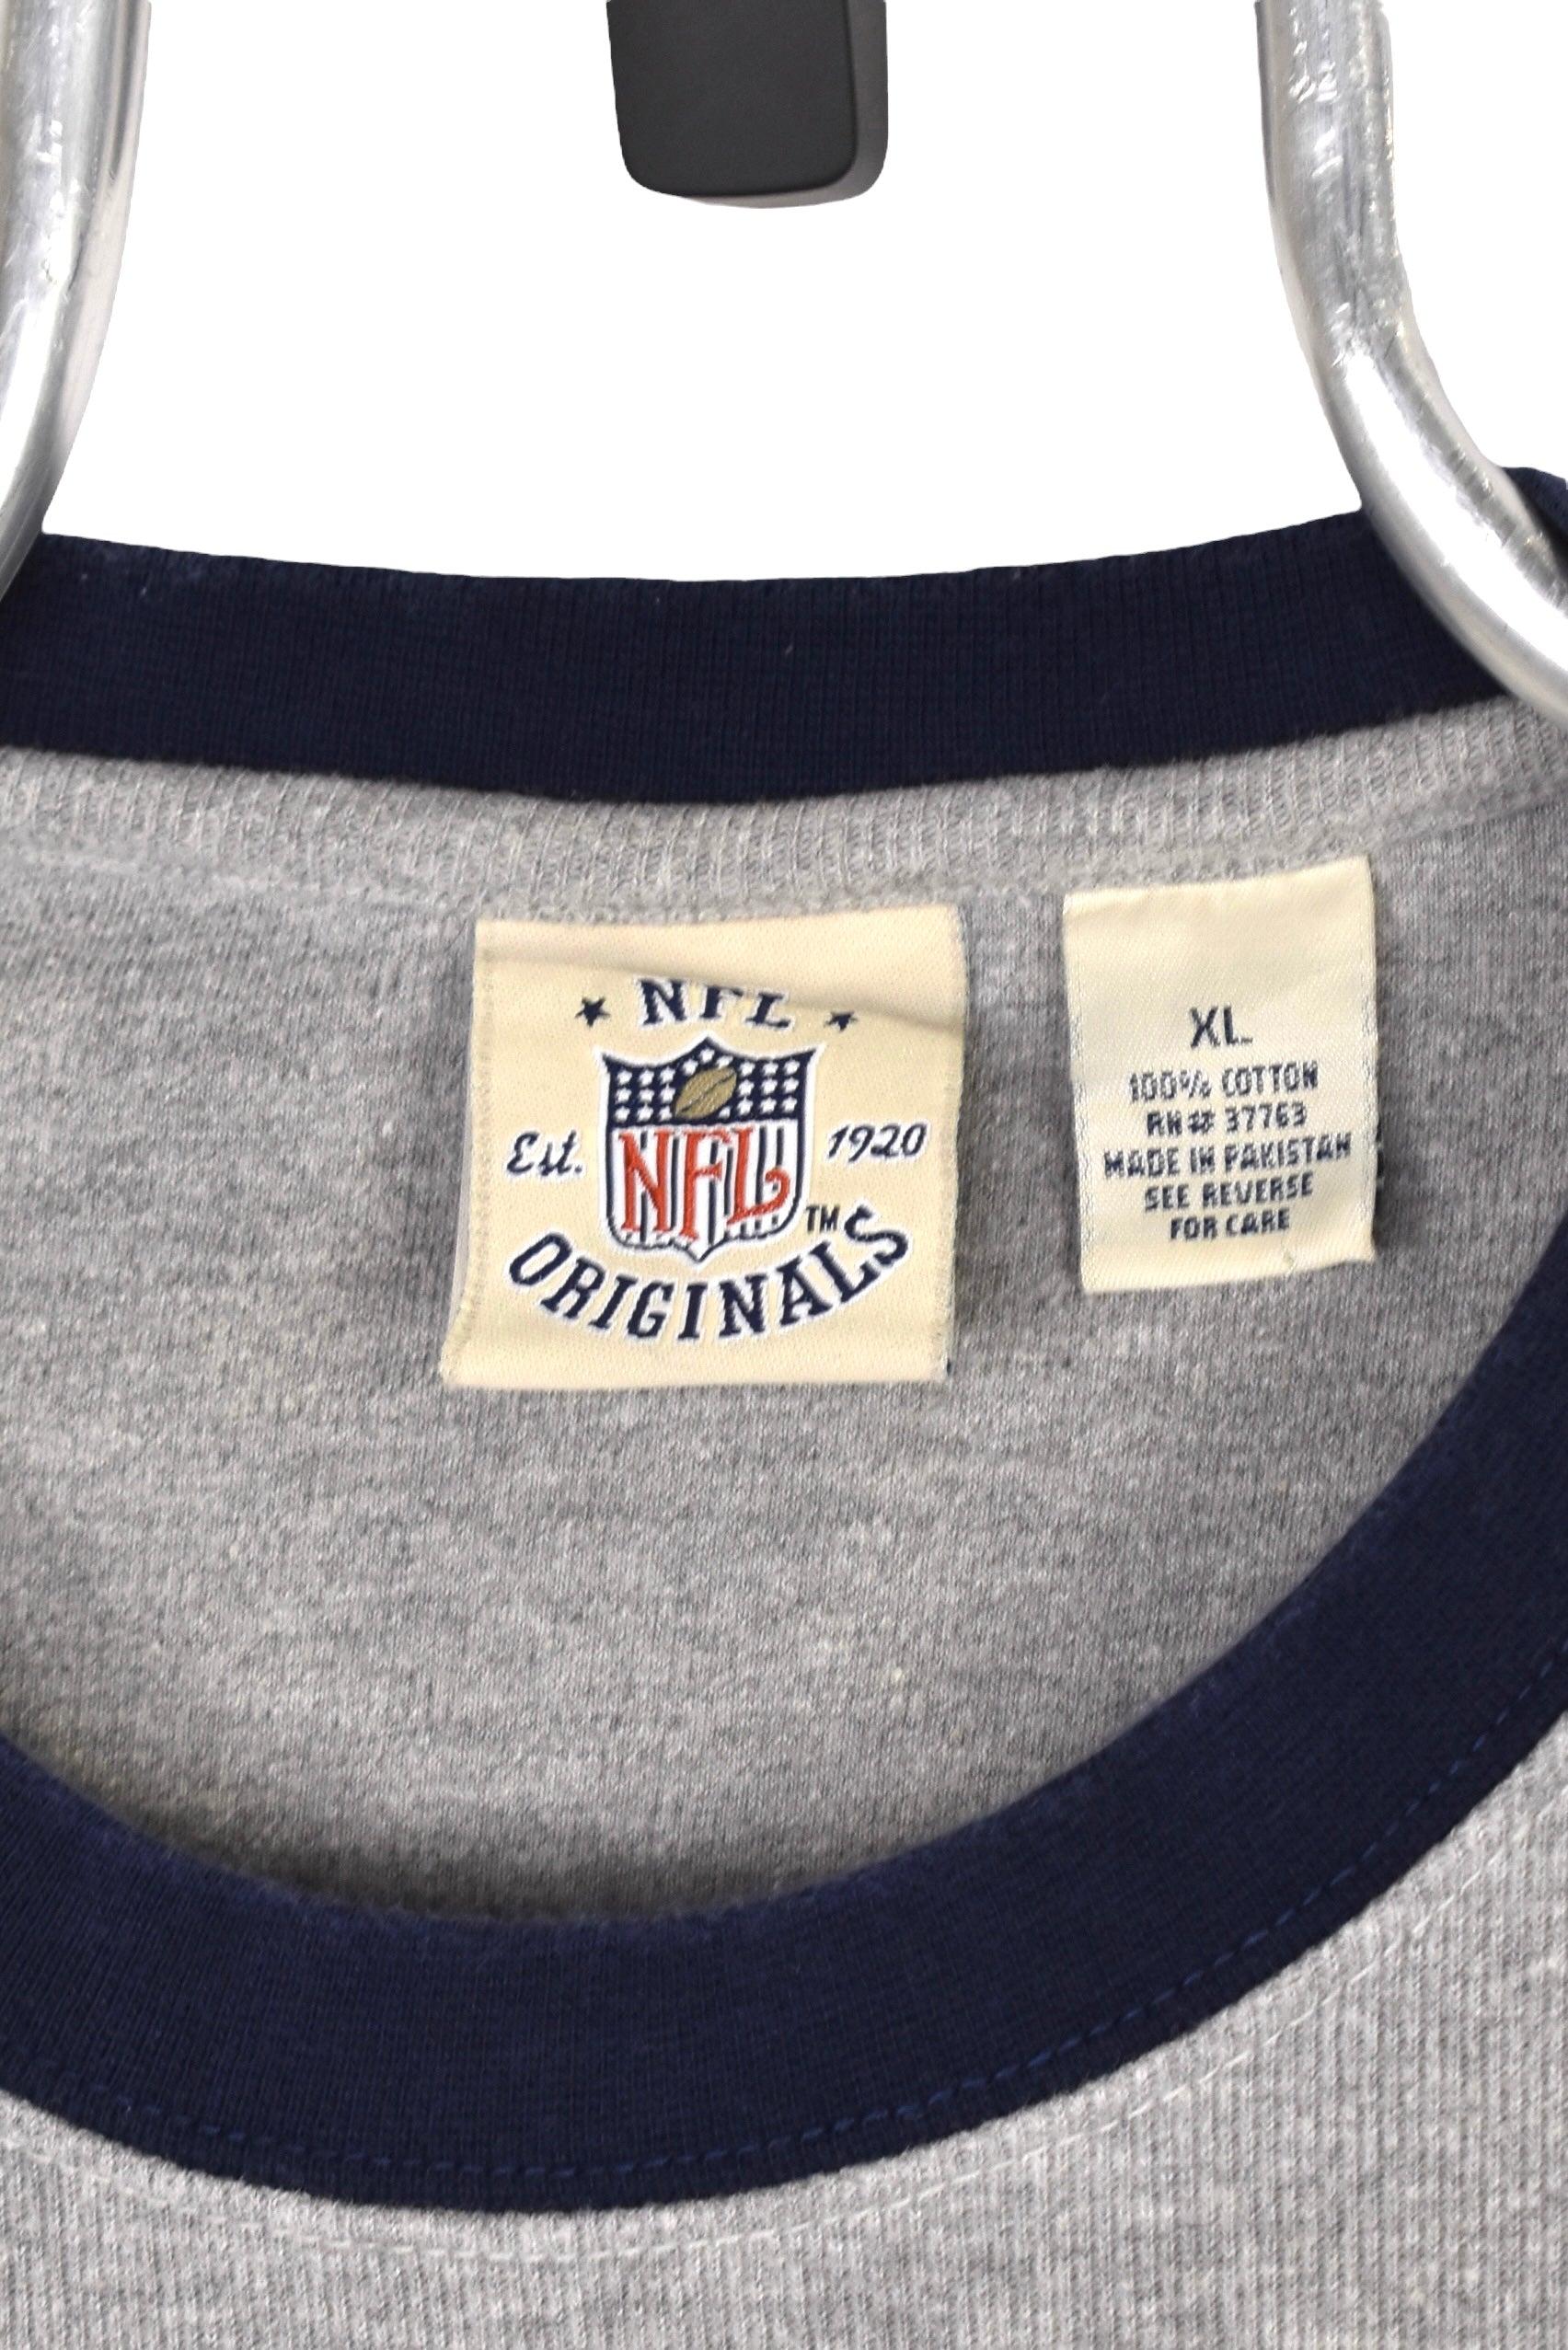 Modern LA Dons sweatshirt XXL, NFL grey embroidered crewneck